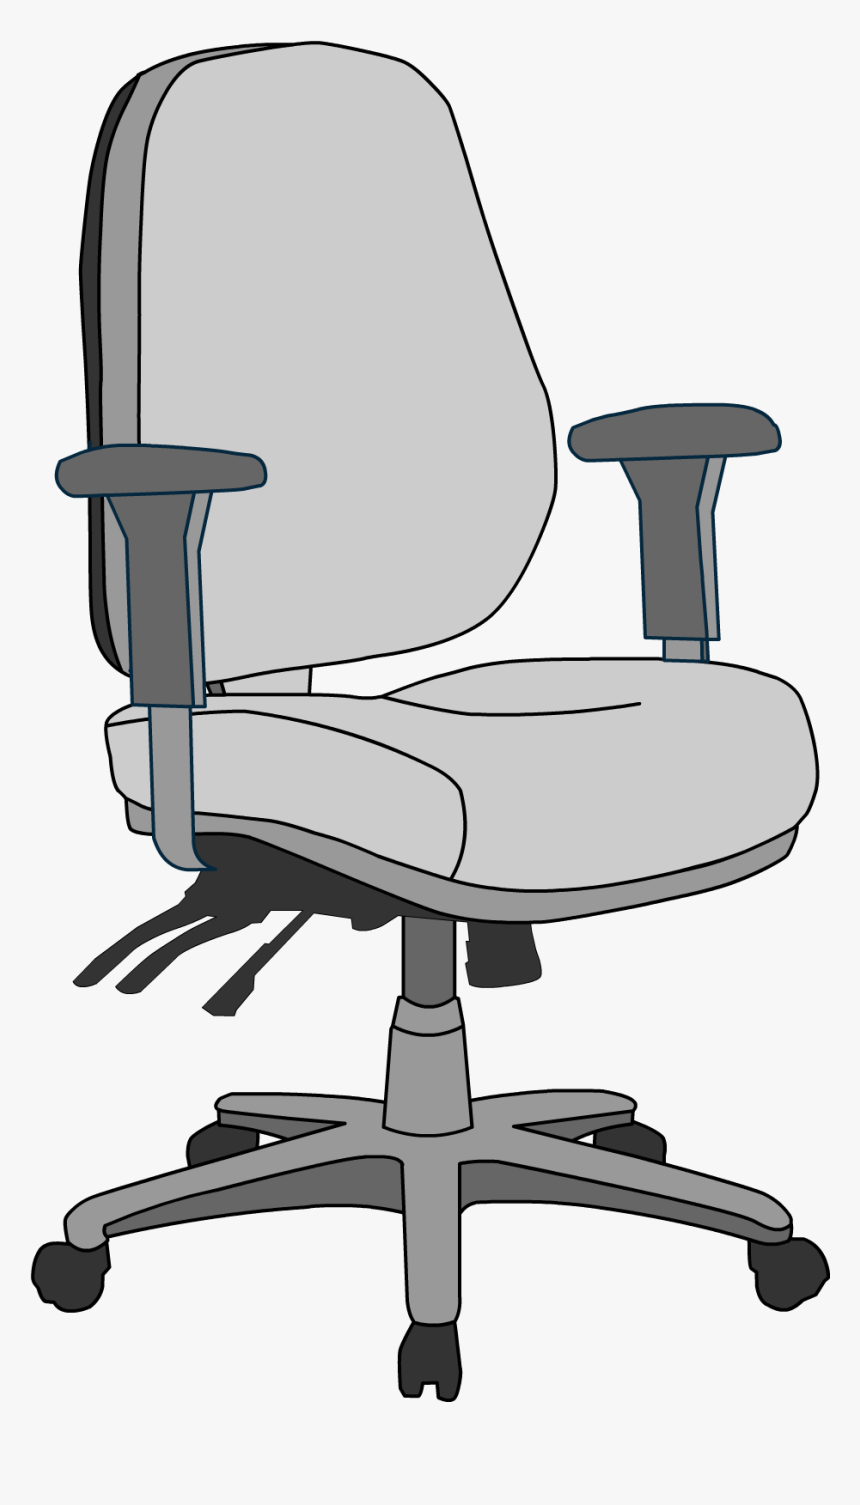 Drawing Chairs Classroom - Ergonomics Chair